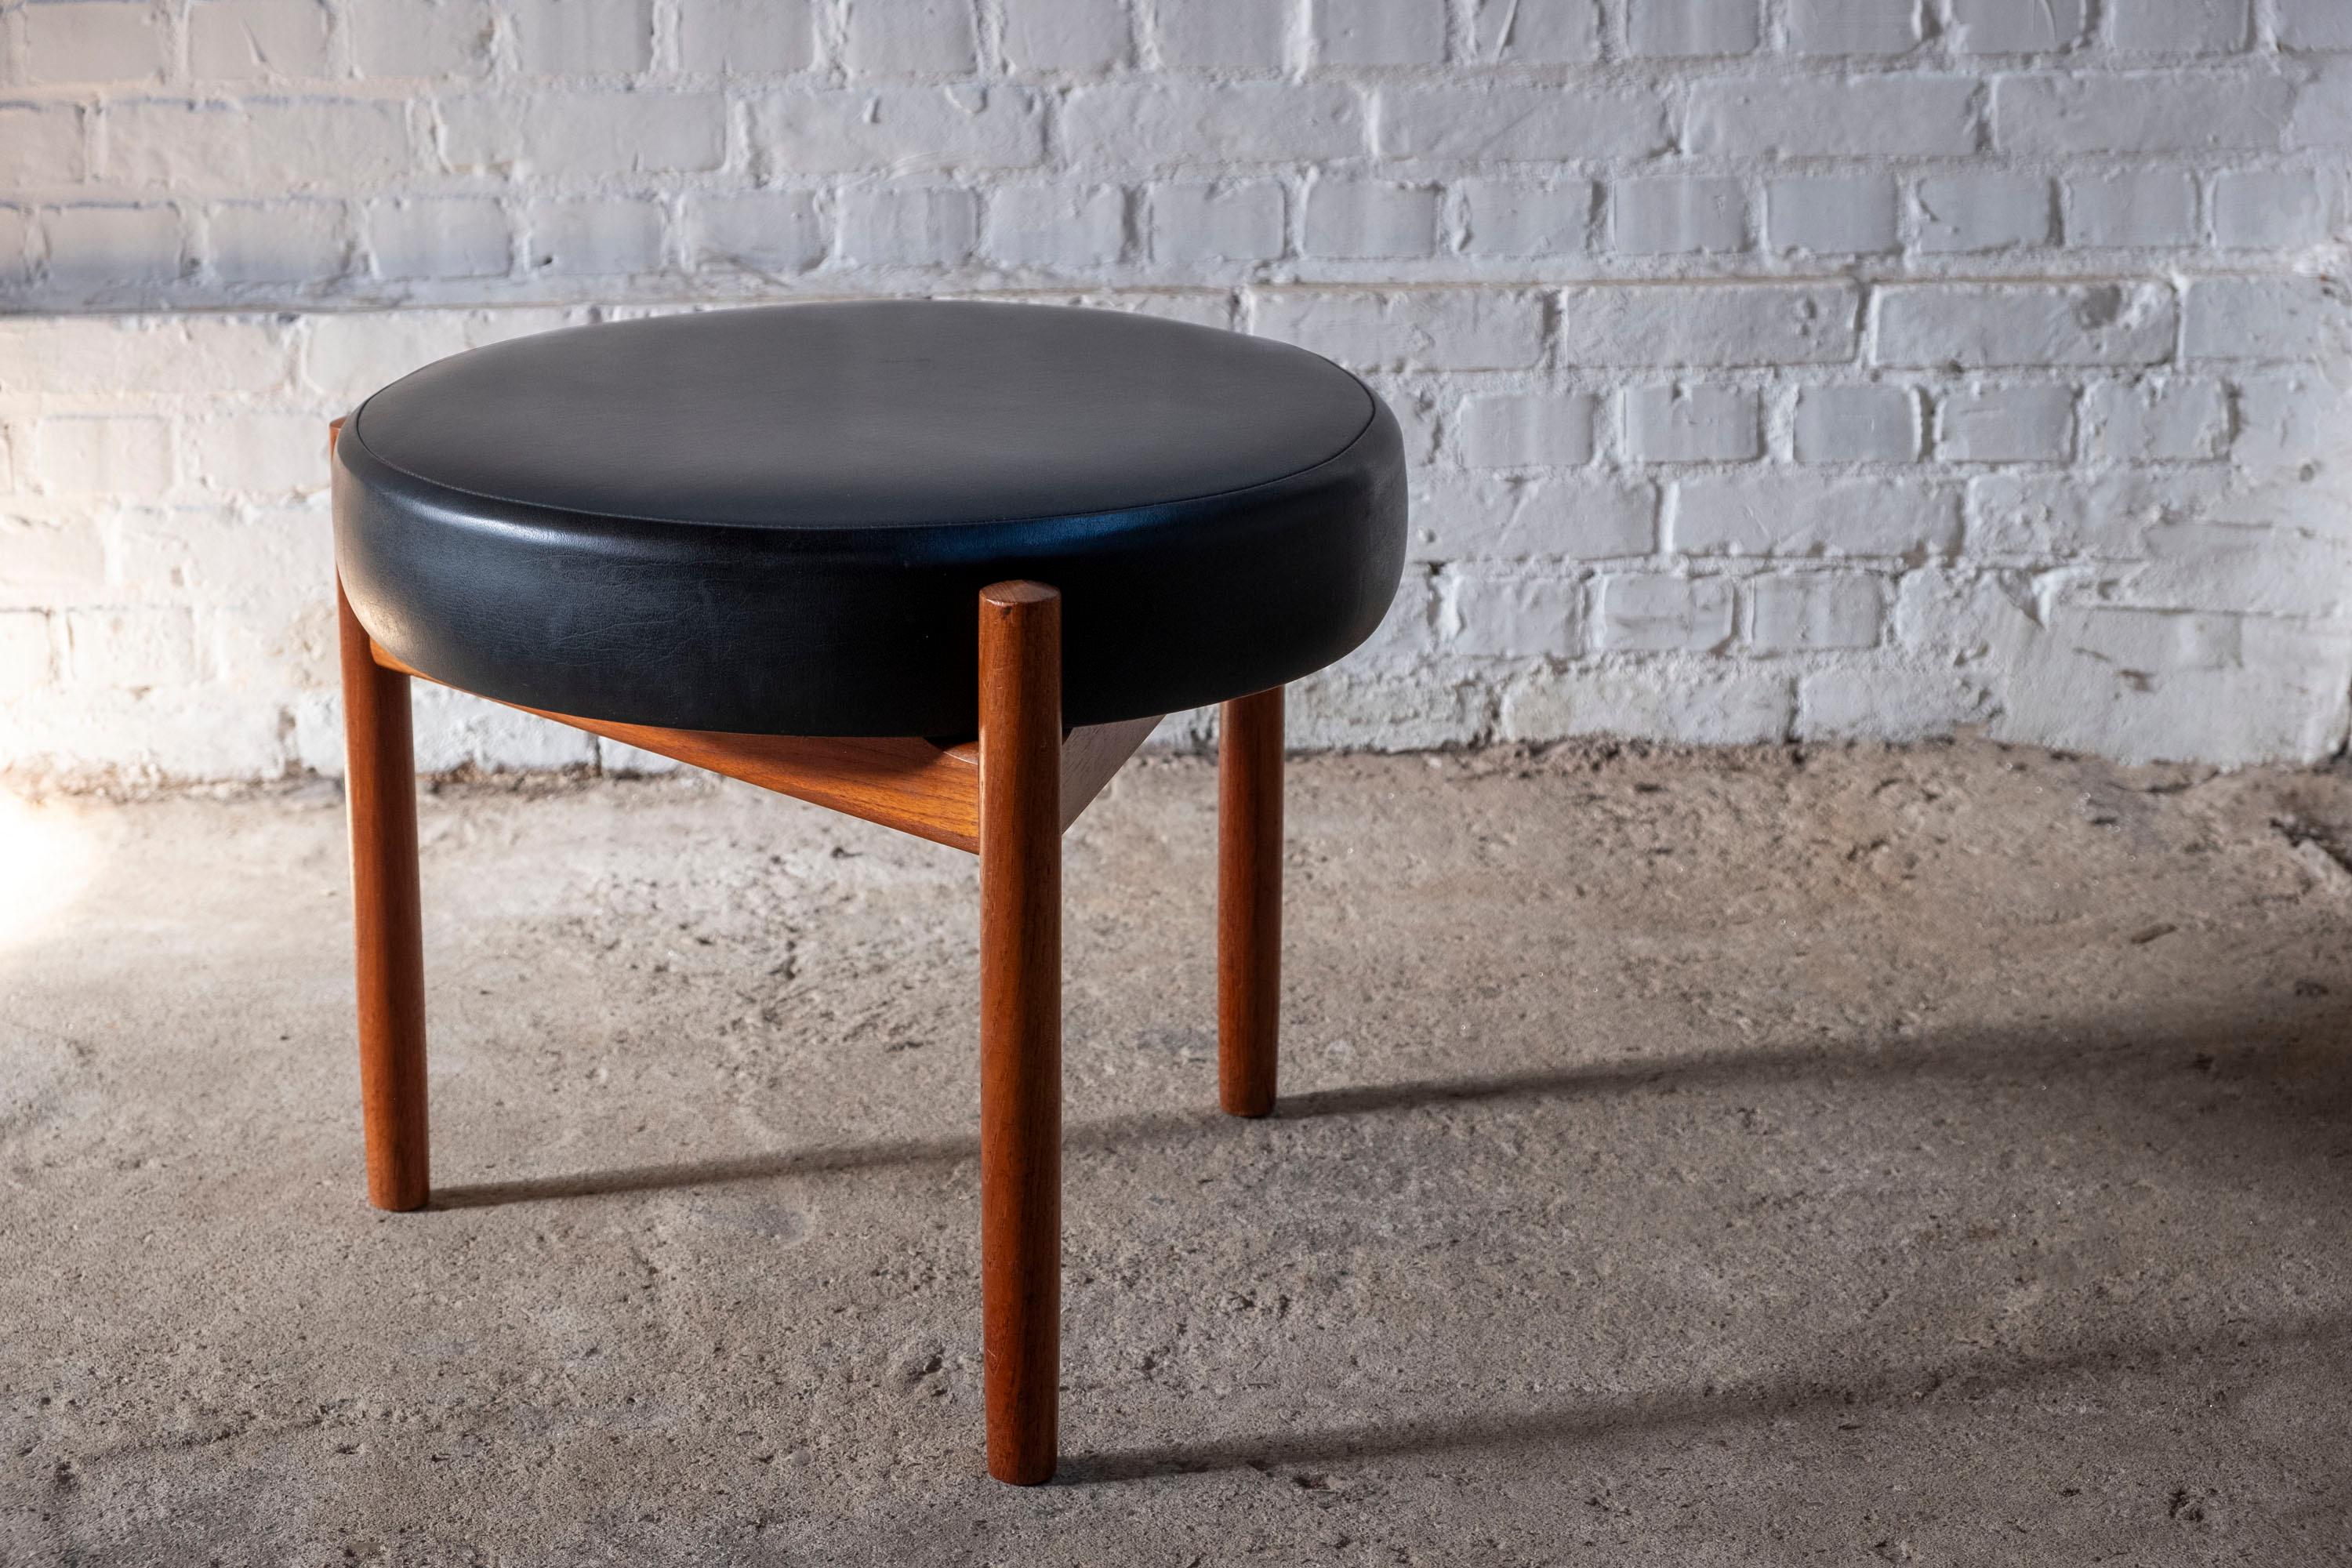 Beautifully designed stool in teak and black vinyl seat by Hugo Frandsen for Spøttrup, Denmark. In very good original vintage condition. Could be used as stool or footstool.